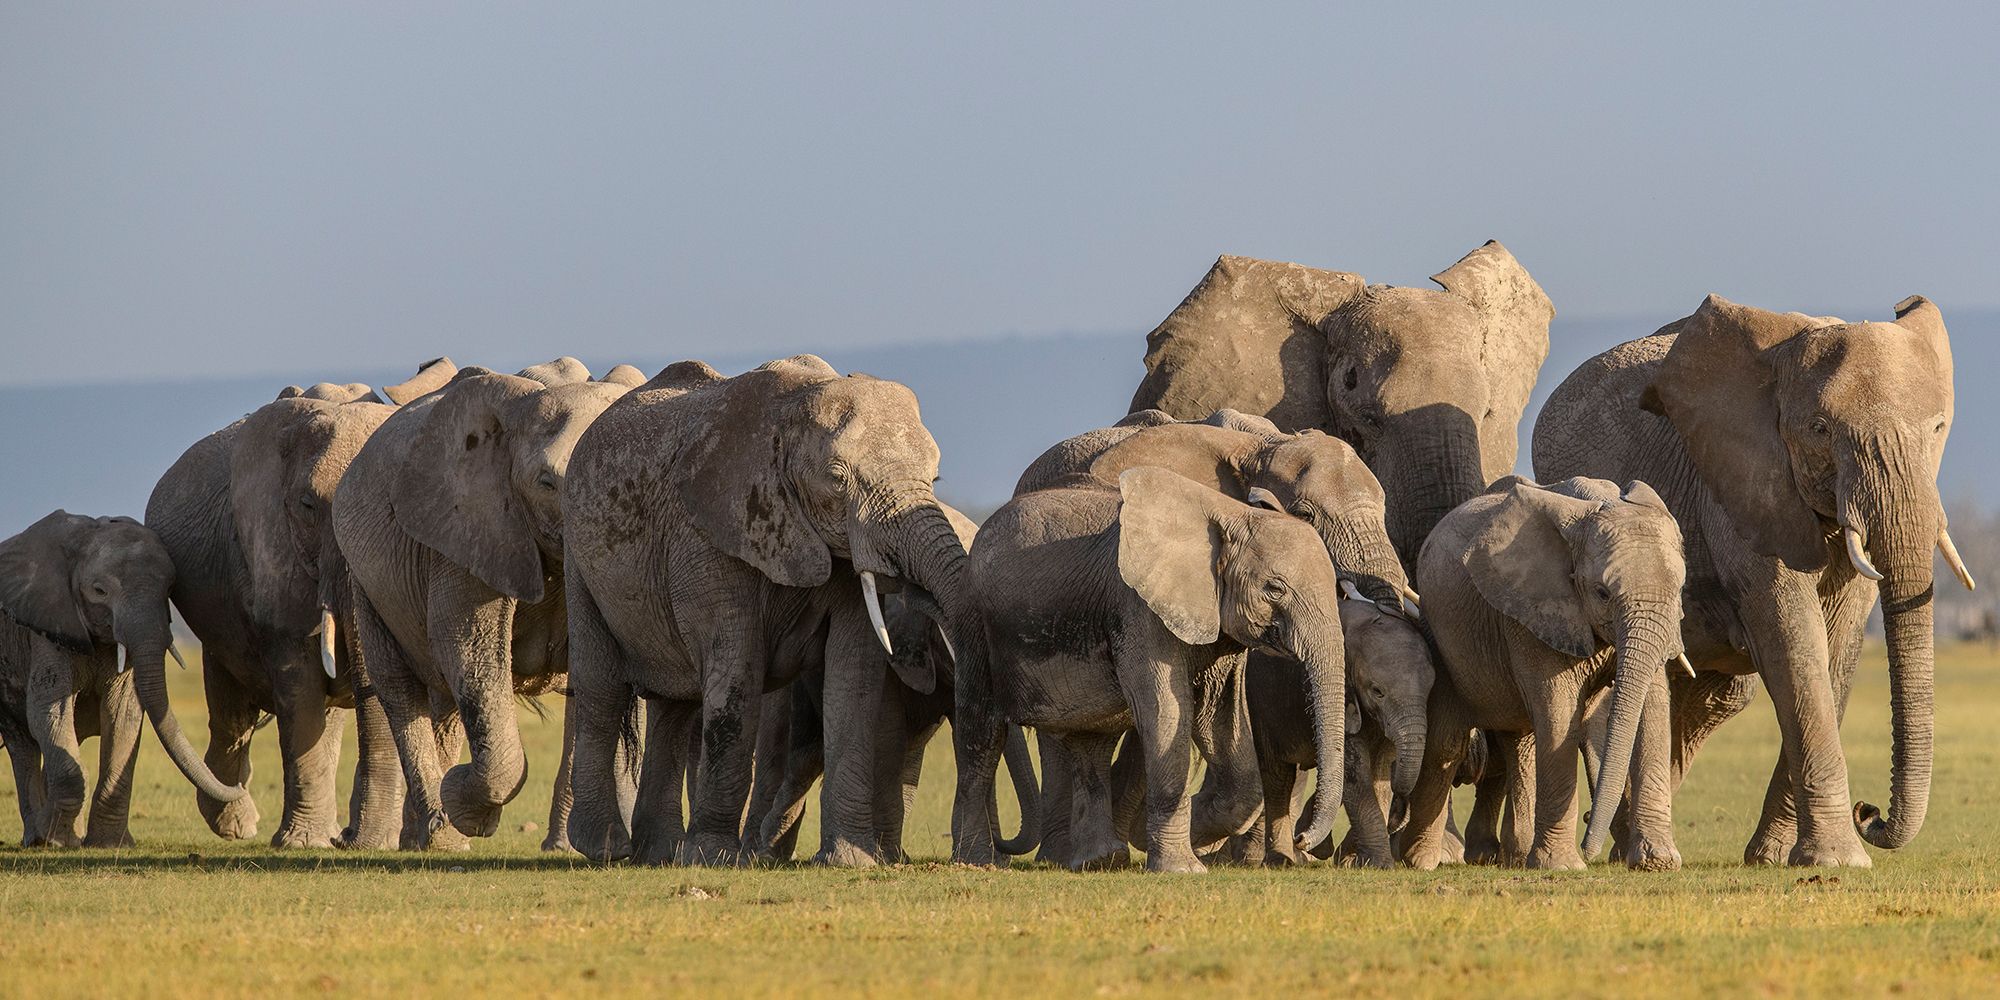 Elephants roam the savanna in National Geographic's Queens